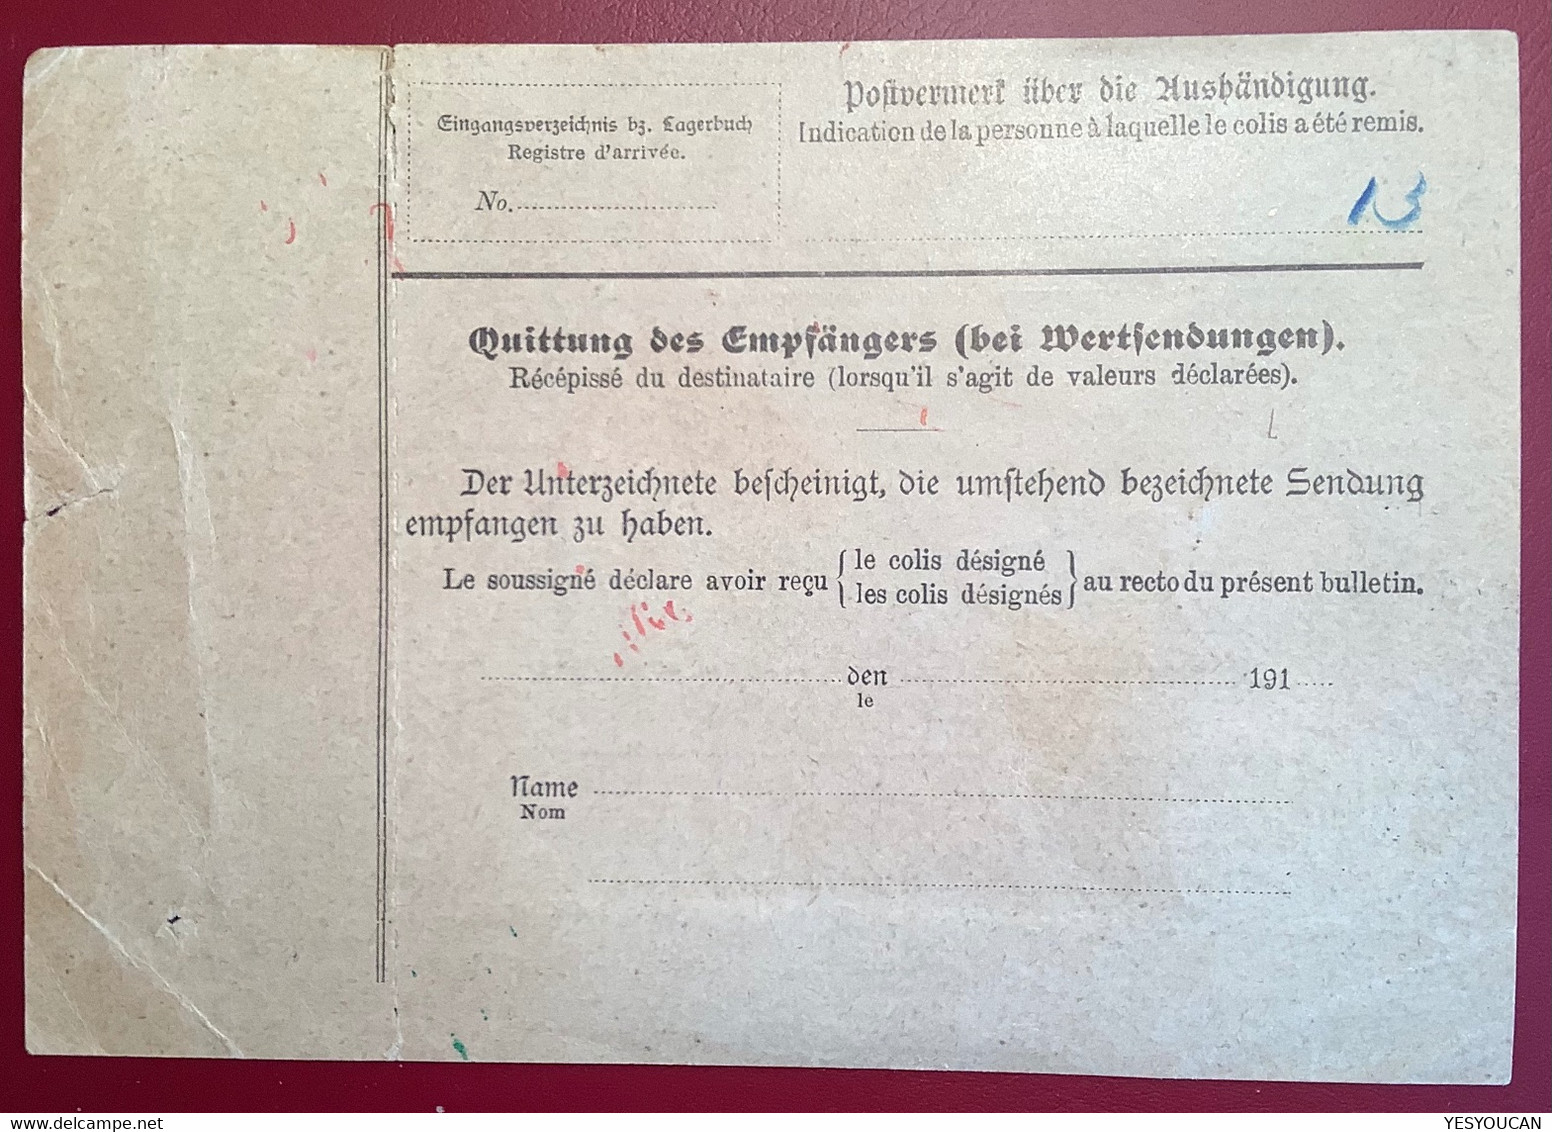 NEUSTADT HZGT COBURG 1915 Germania Mi 93 EF Paketkarte Via Basel>Nyon Schweiz (colis Postal Bayern - Briefe U. Dokumente